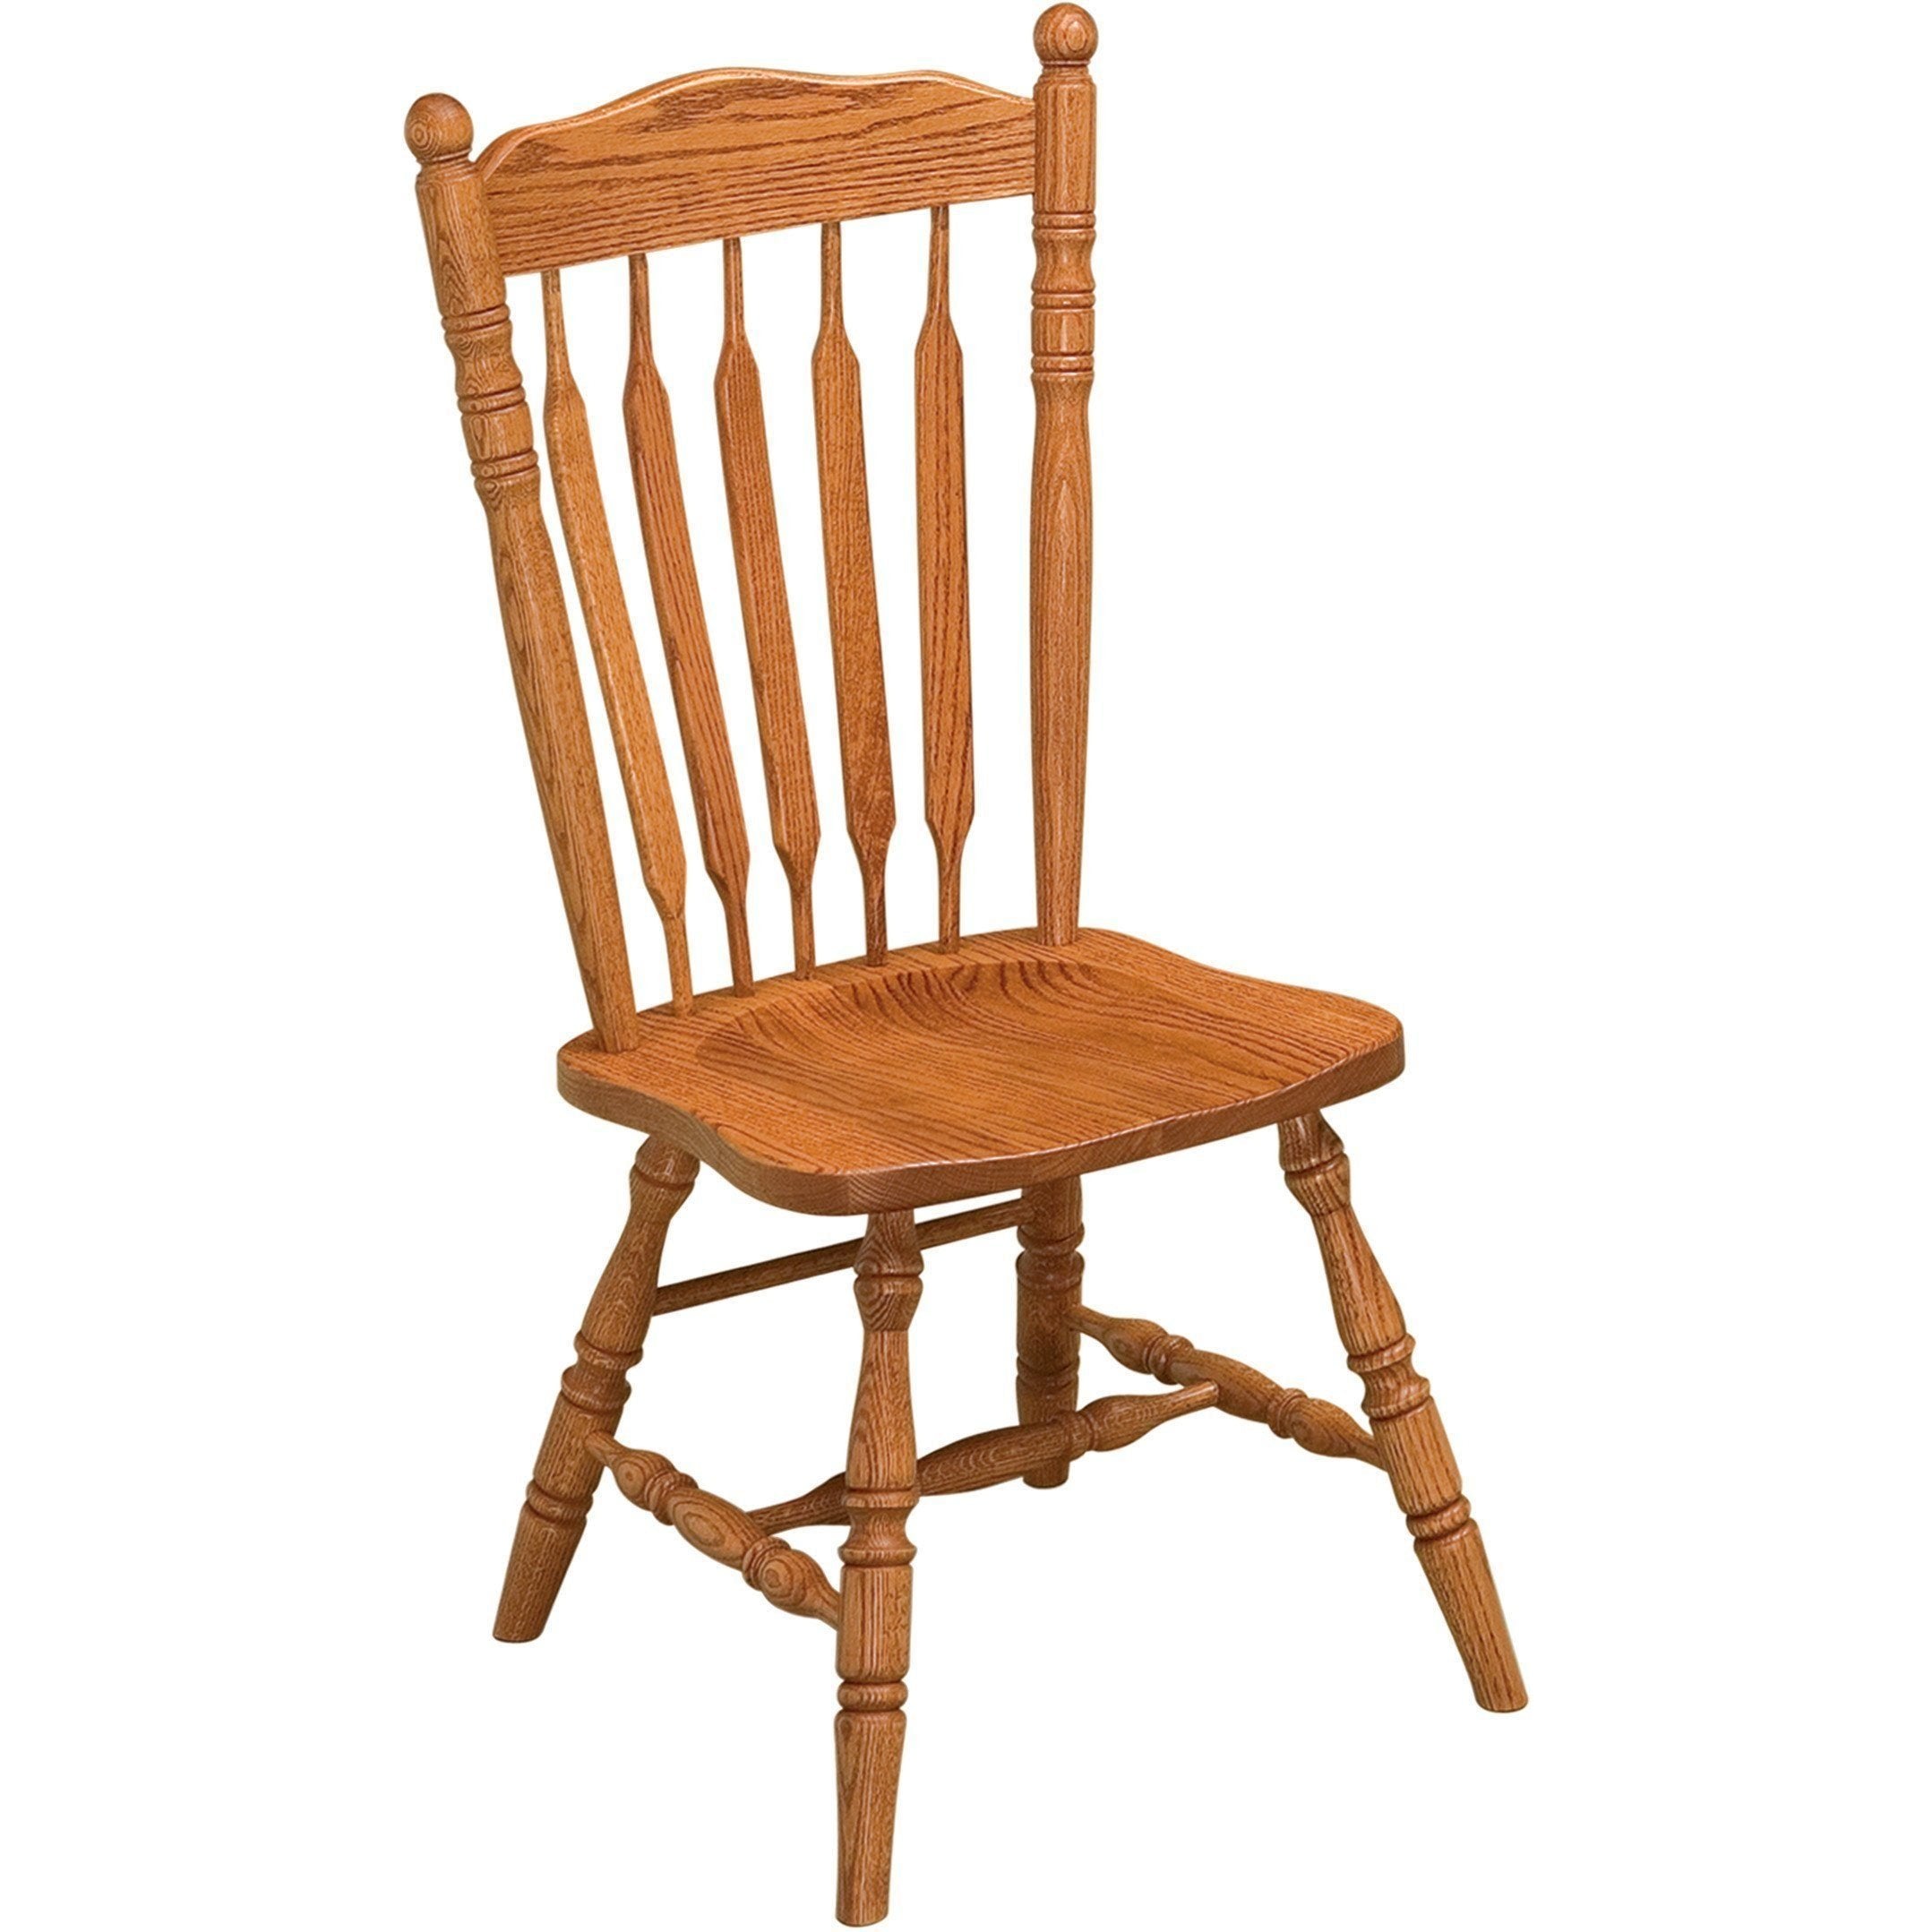 postpaddle-side-chair-260270.jpg